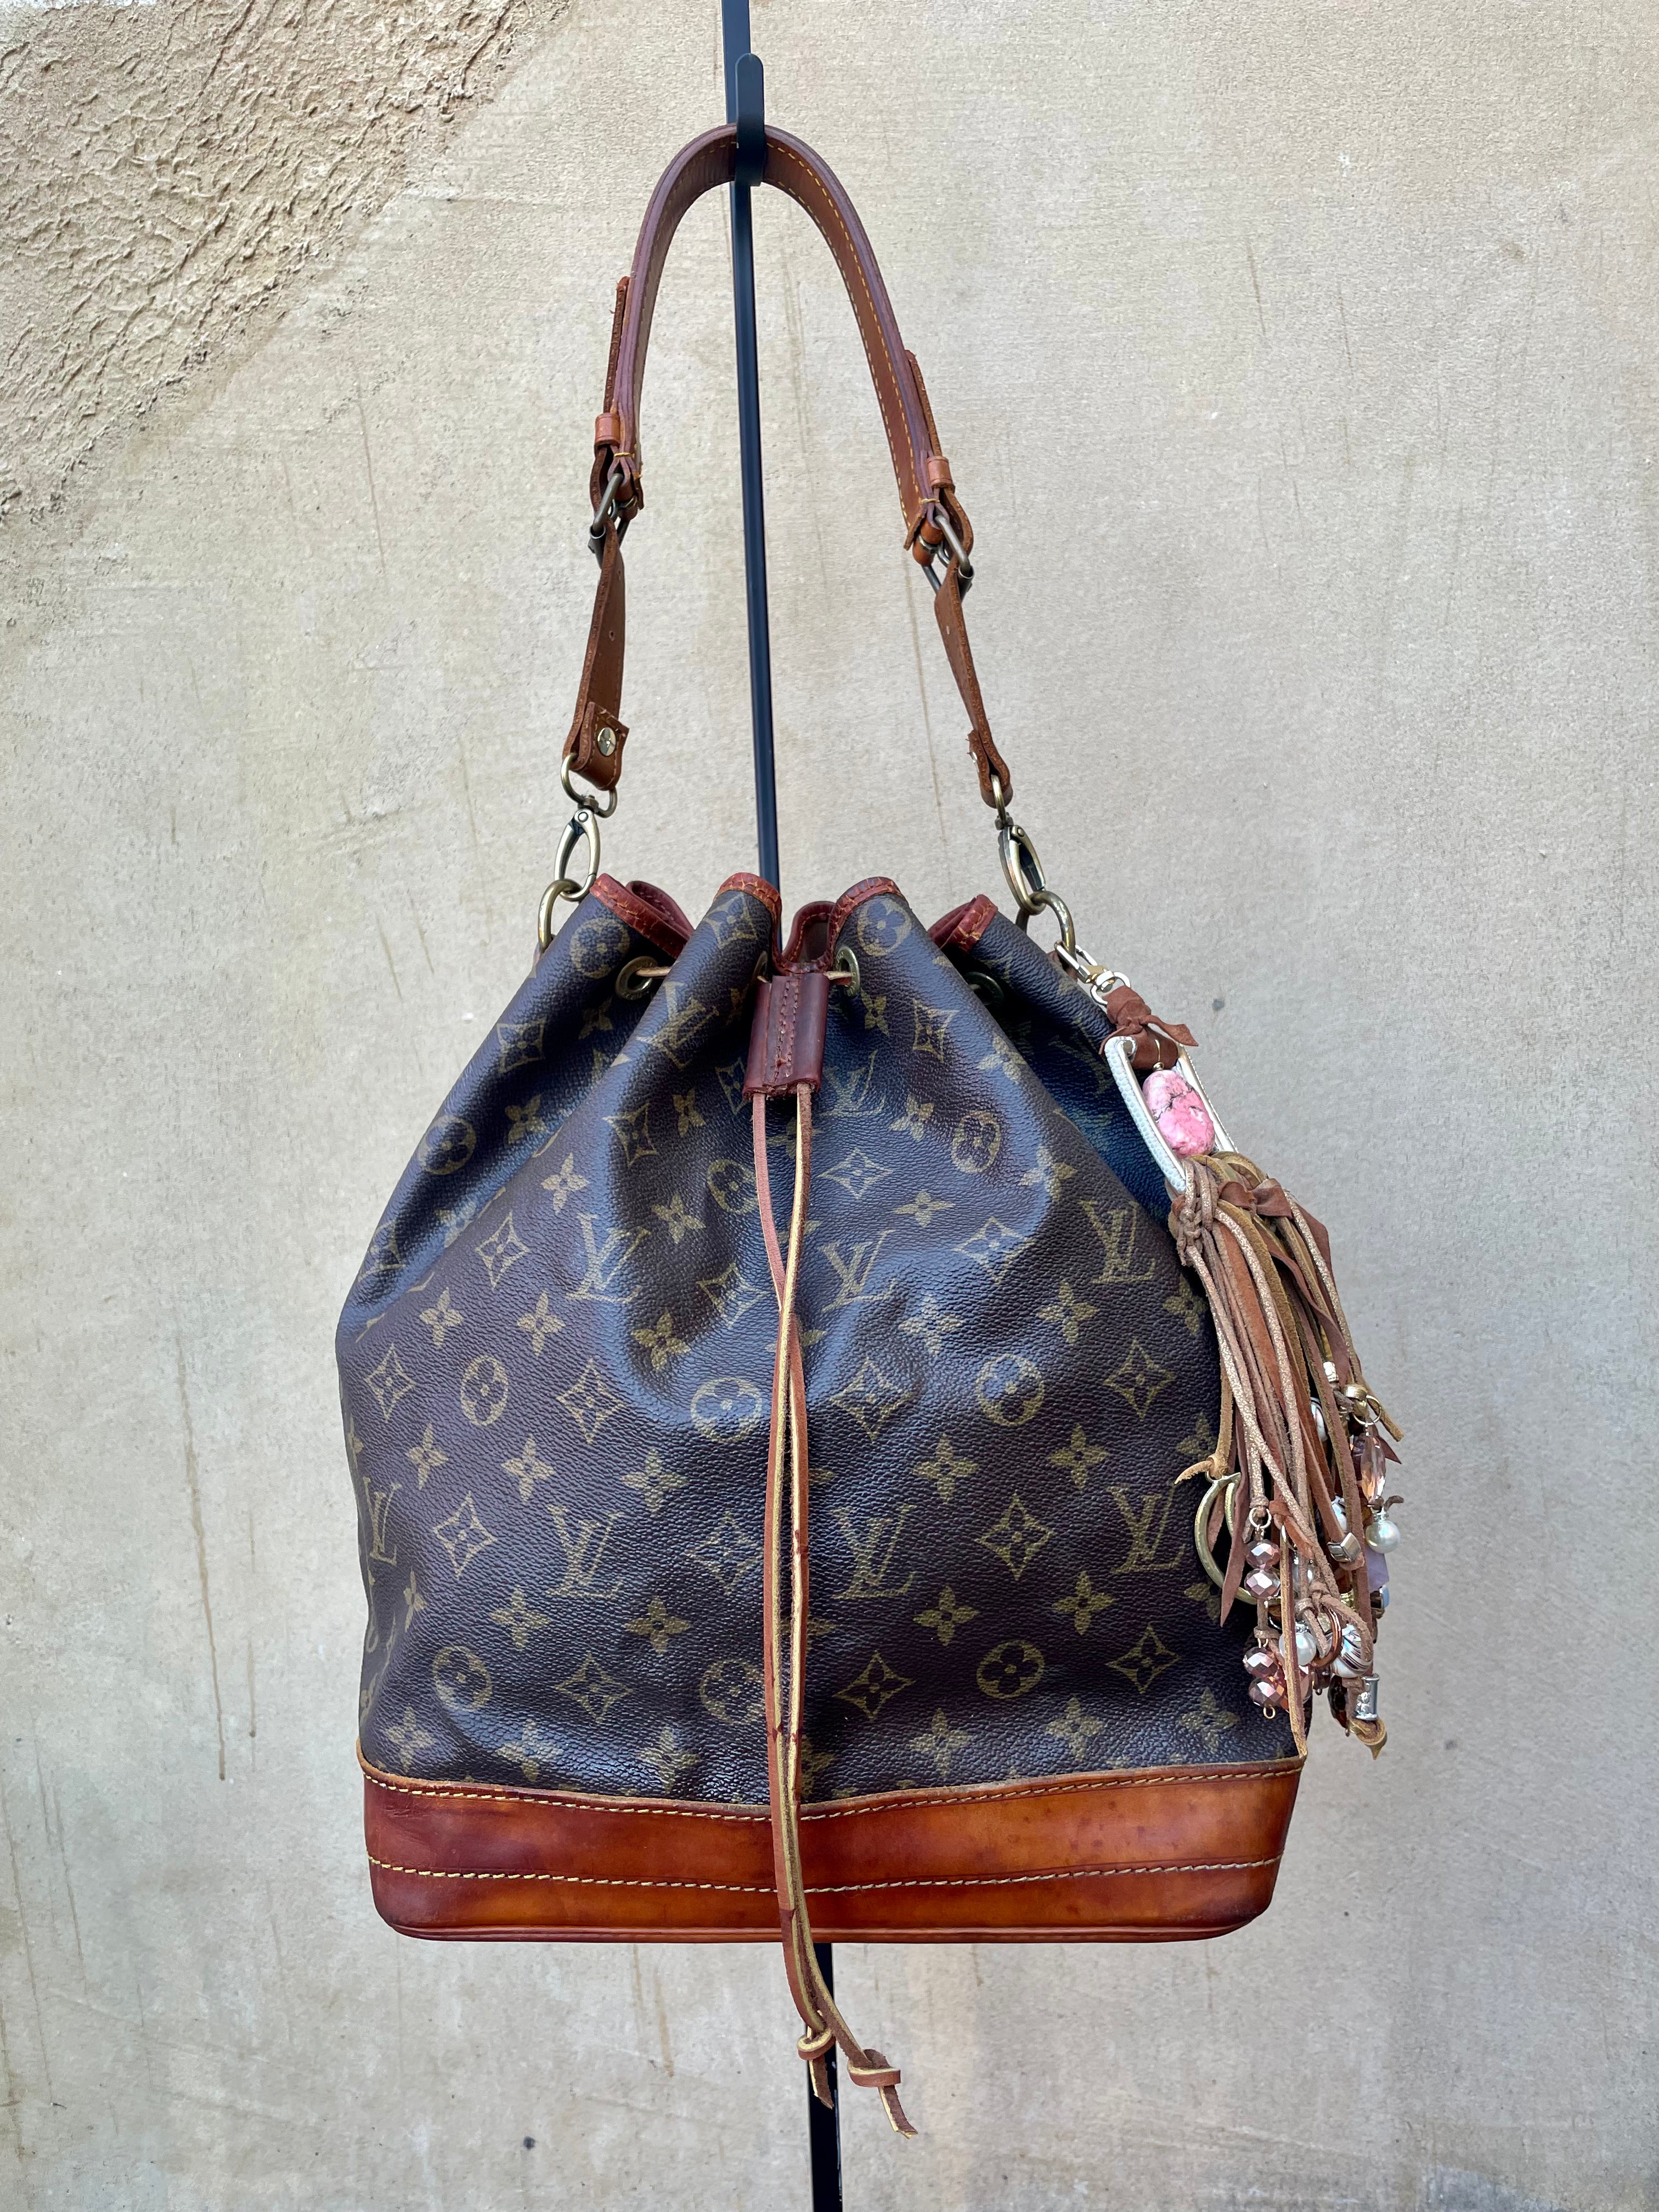 authentic lv handbags